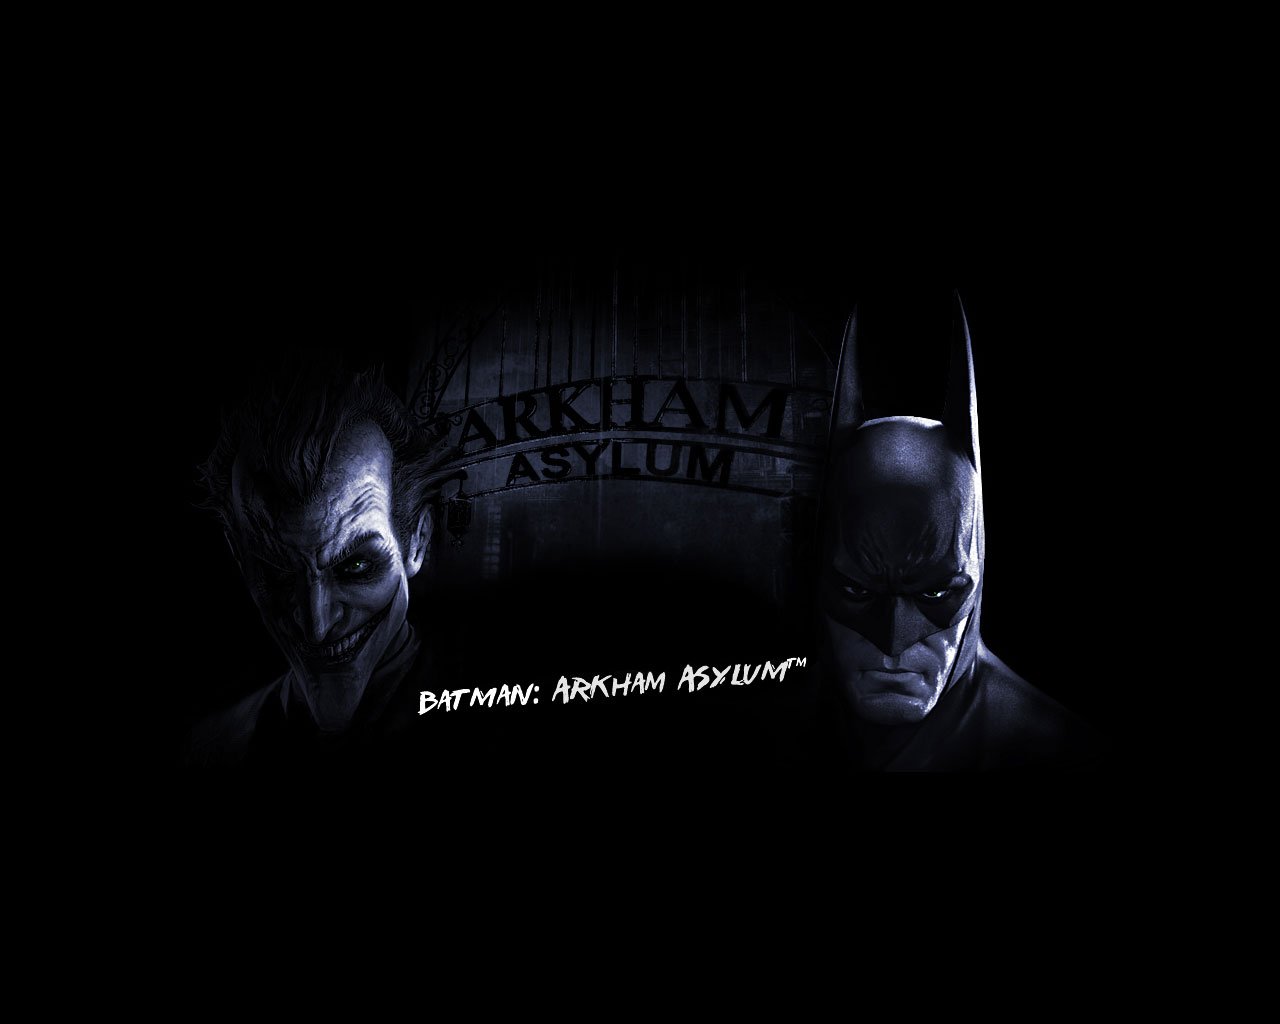 Batman Arkham Asylum Joker Wallpapers 5919 Hd Wallpapers in Games 1280x1024